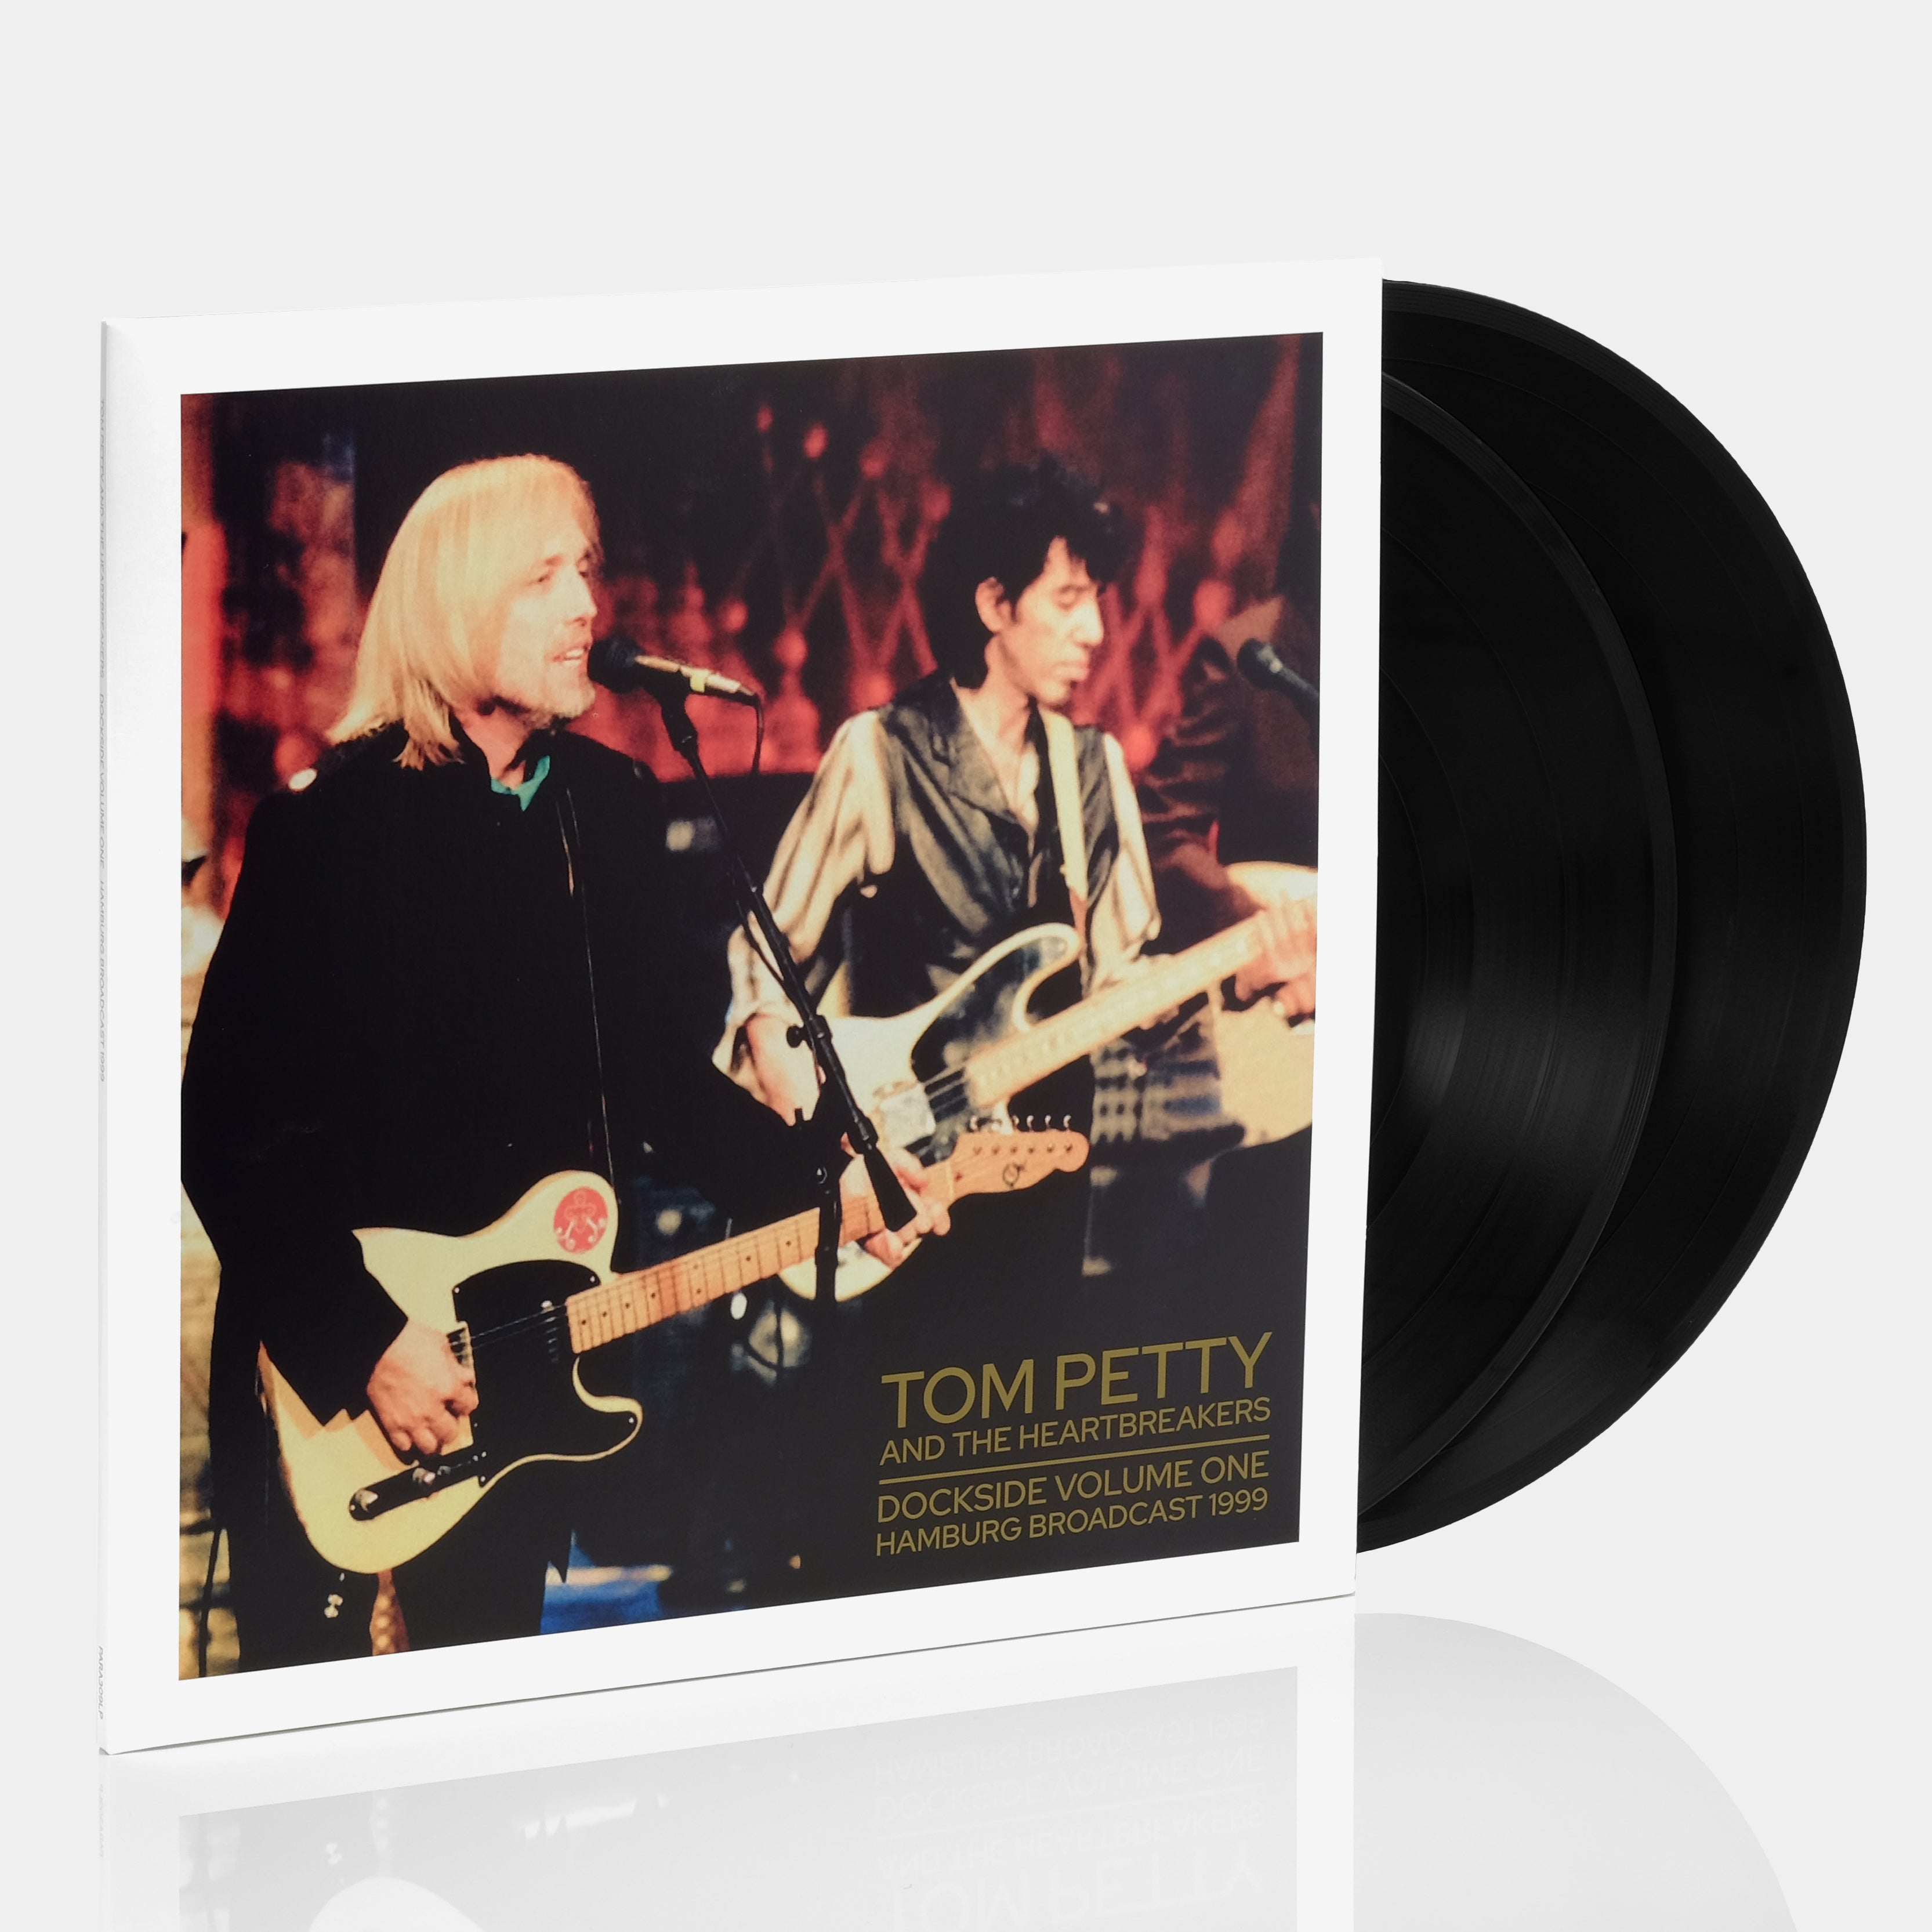 Tom Petty and the Heartbreakers - Dockside Volume One Hamburg Broadcast 1999 2xLP Vinyl Record